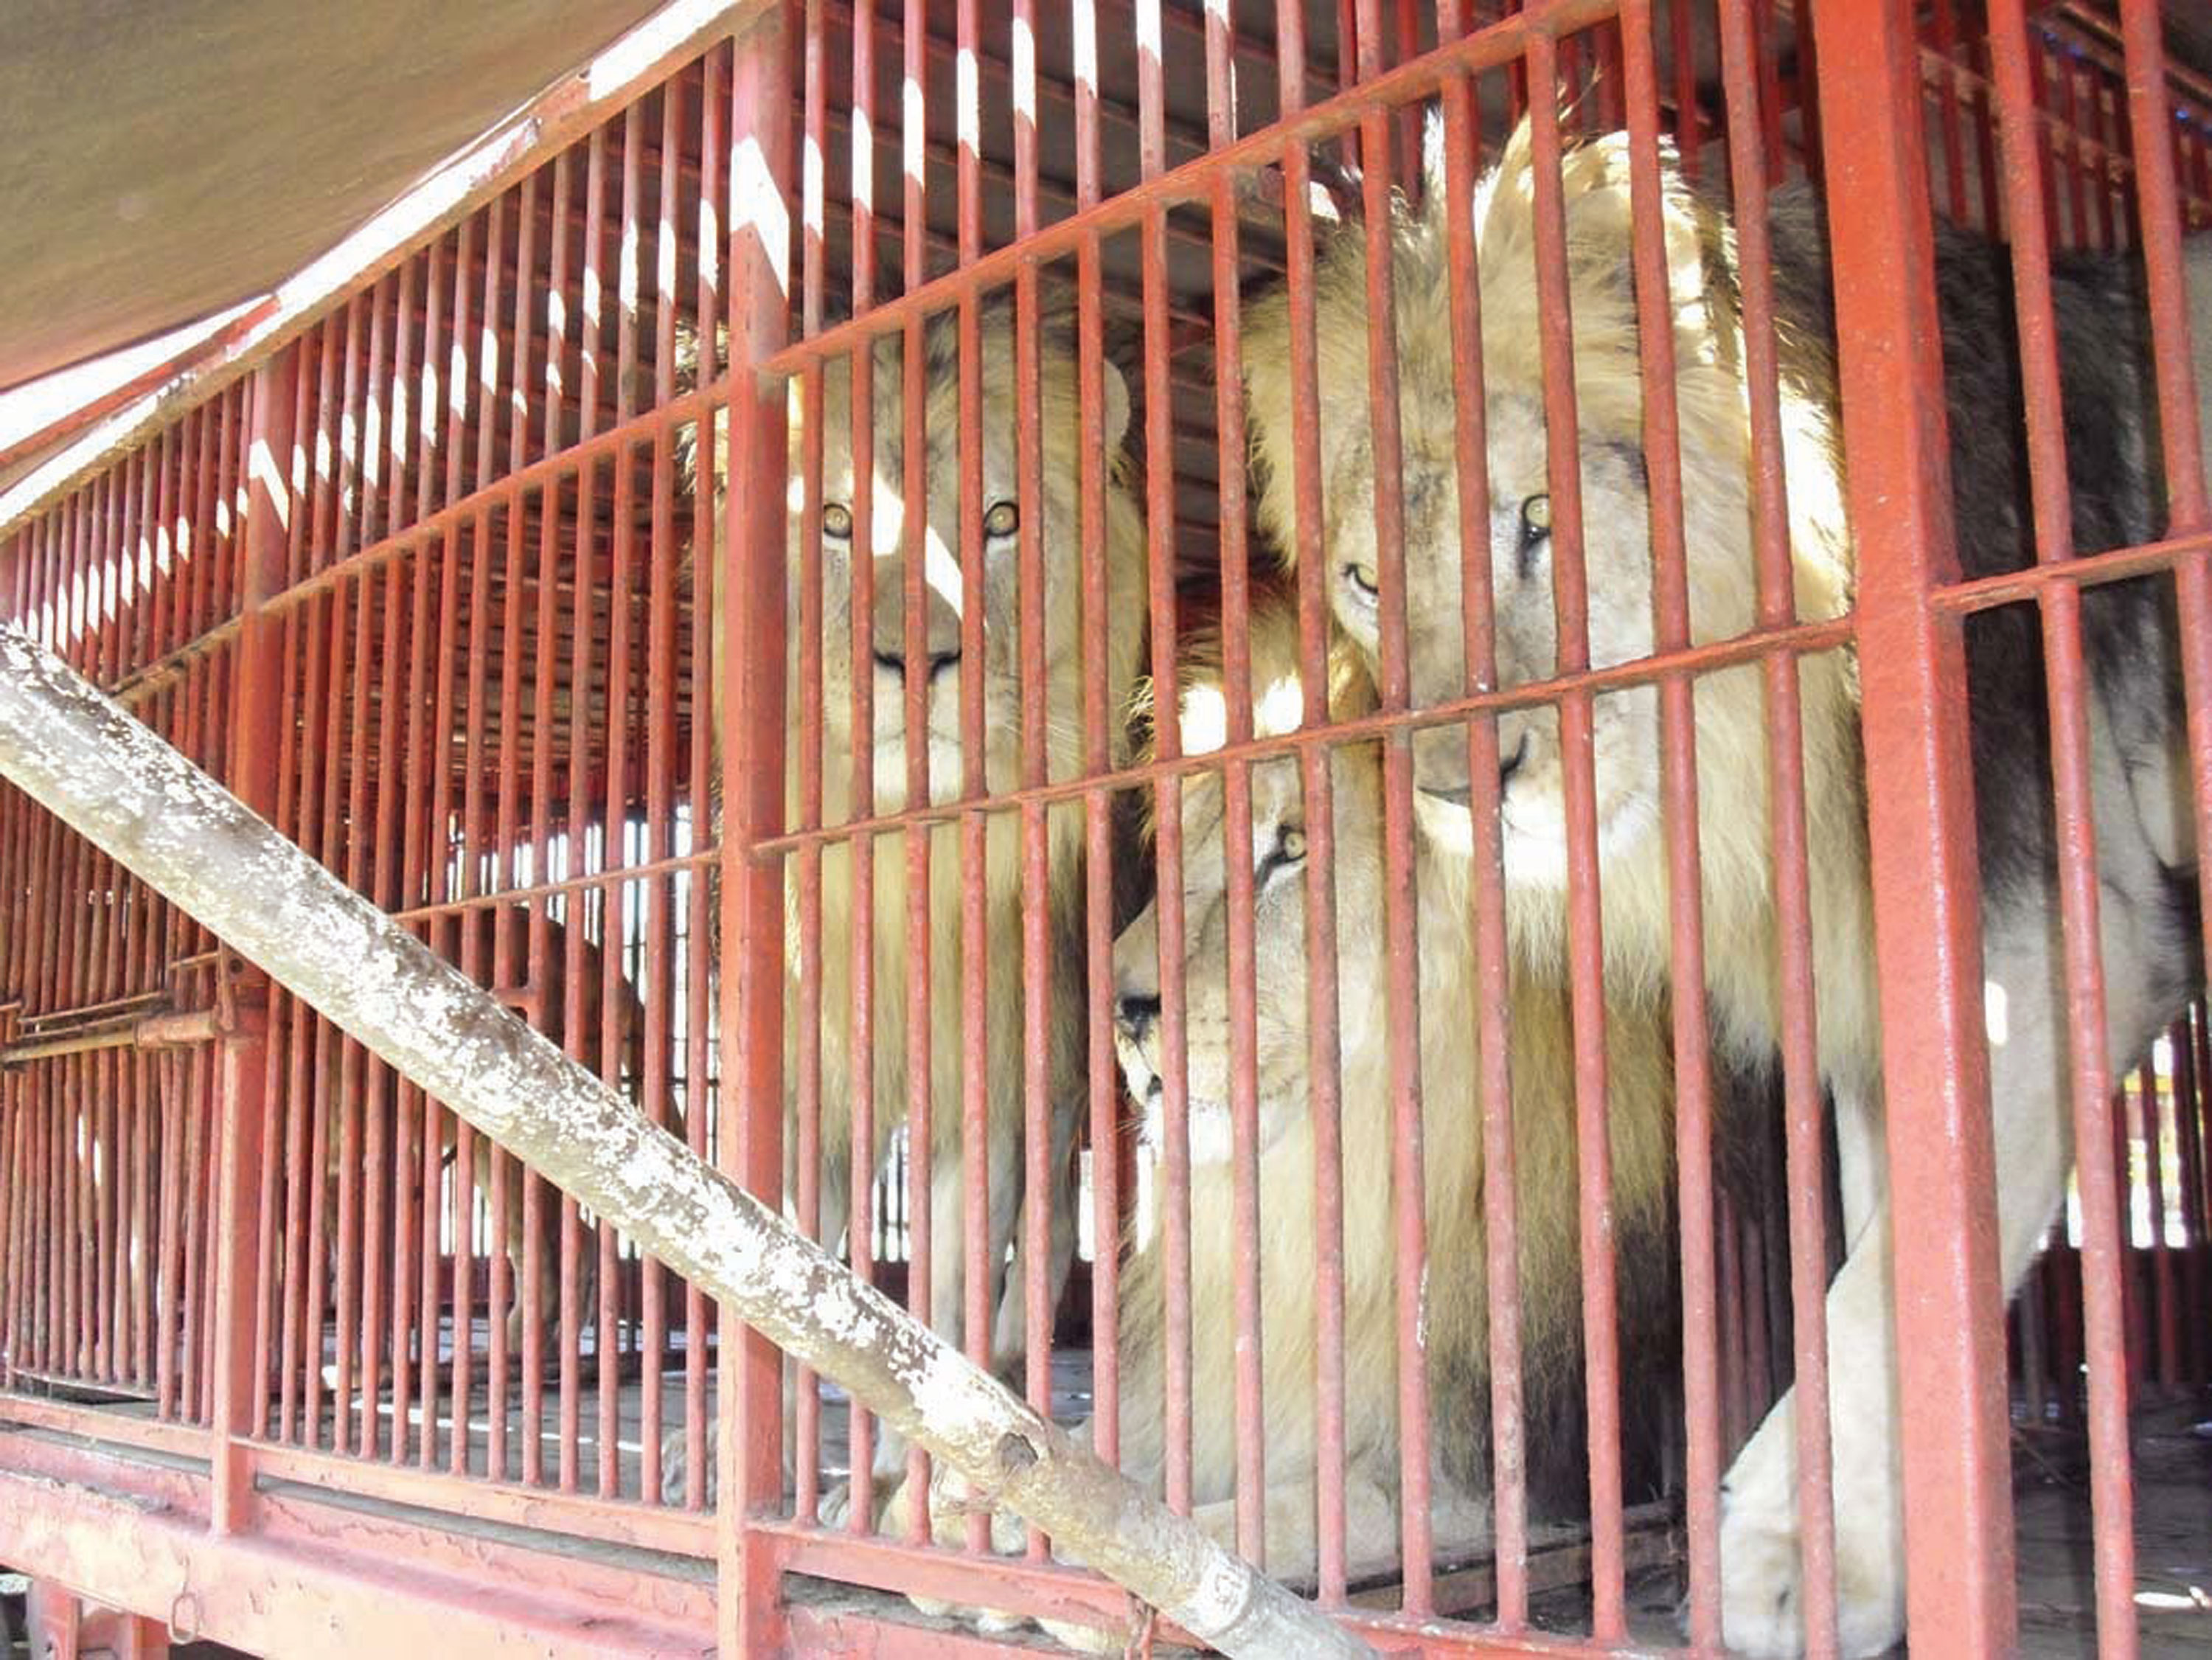 circus animals in cages